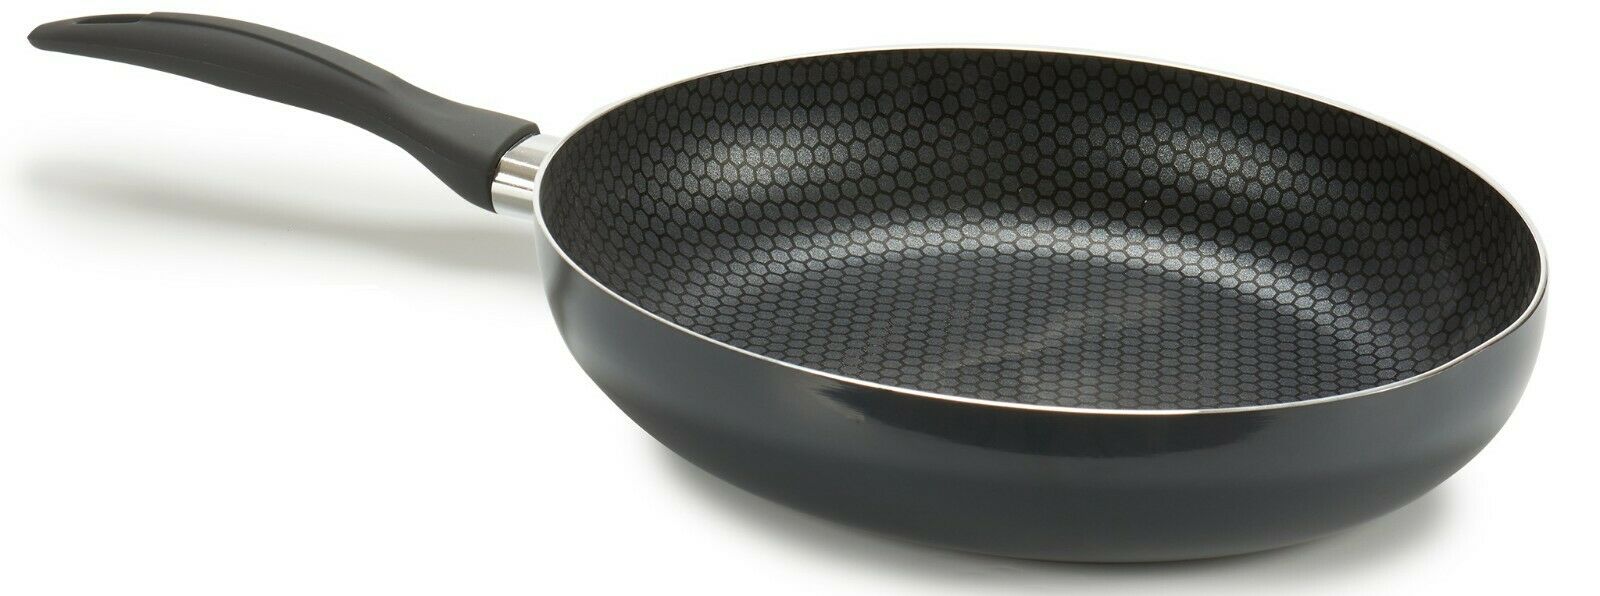 26cm Large Frying Pan Induction Aluminum Frying Pan Non Stick Soft Feel Handle